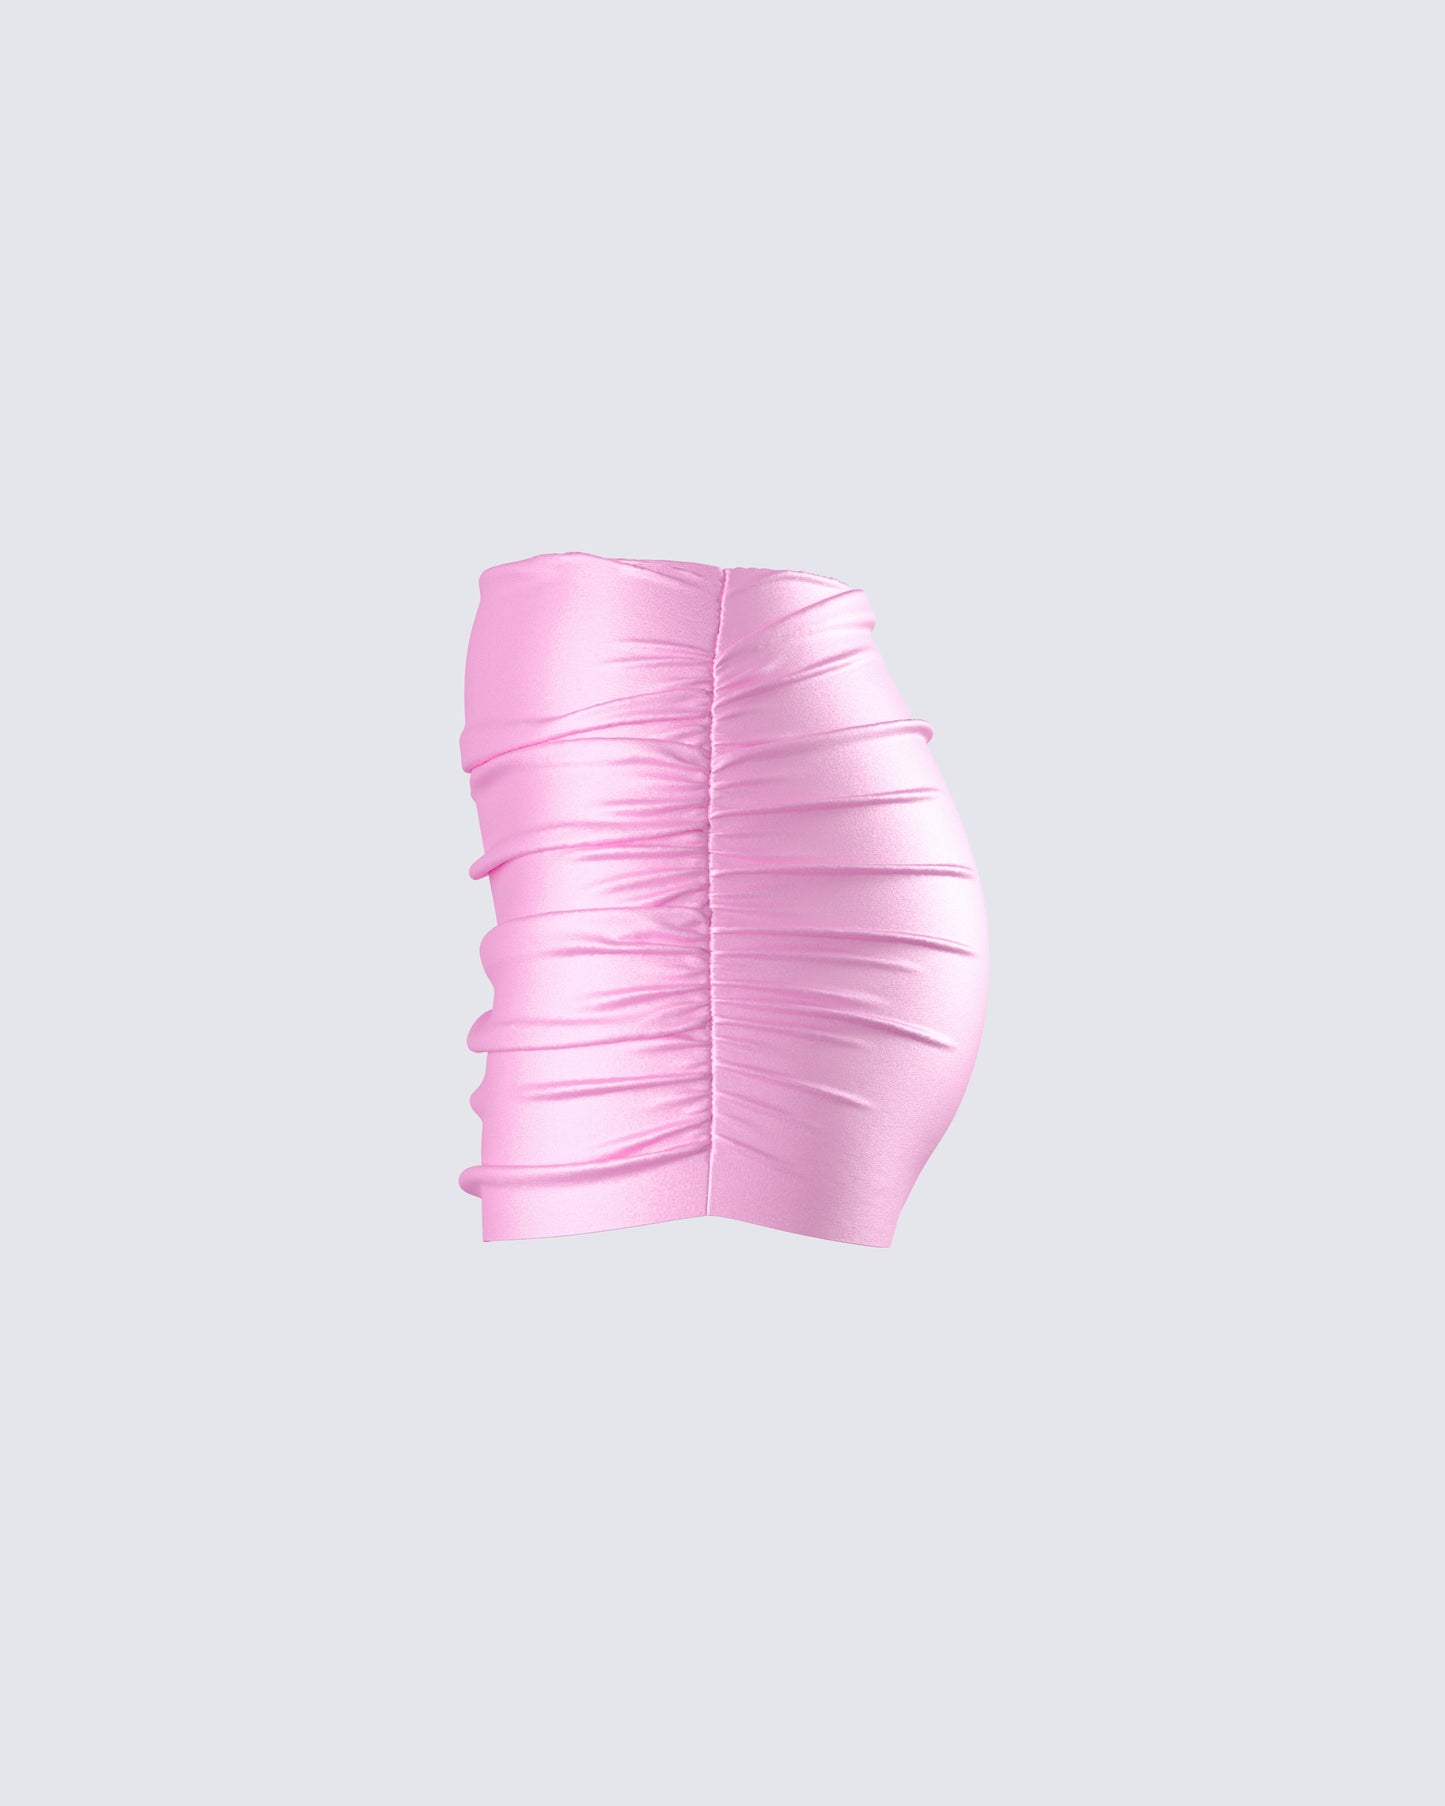 Rivi Pink Satin Micro Mini Skirt